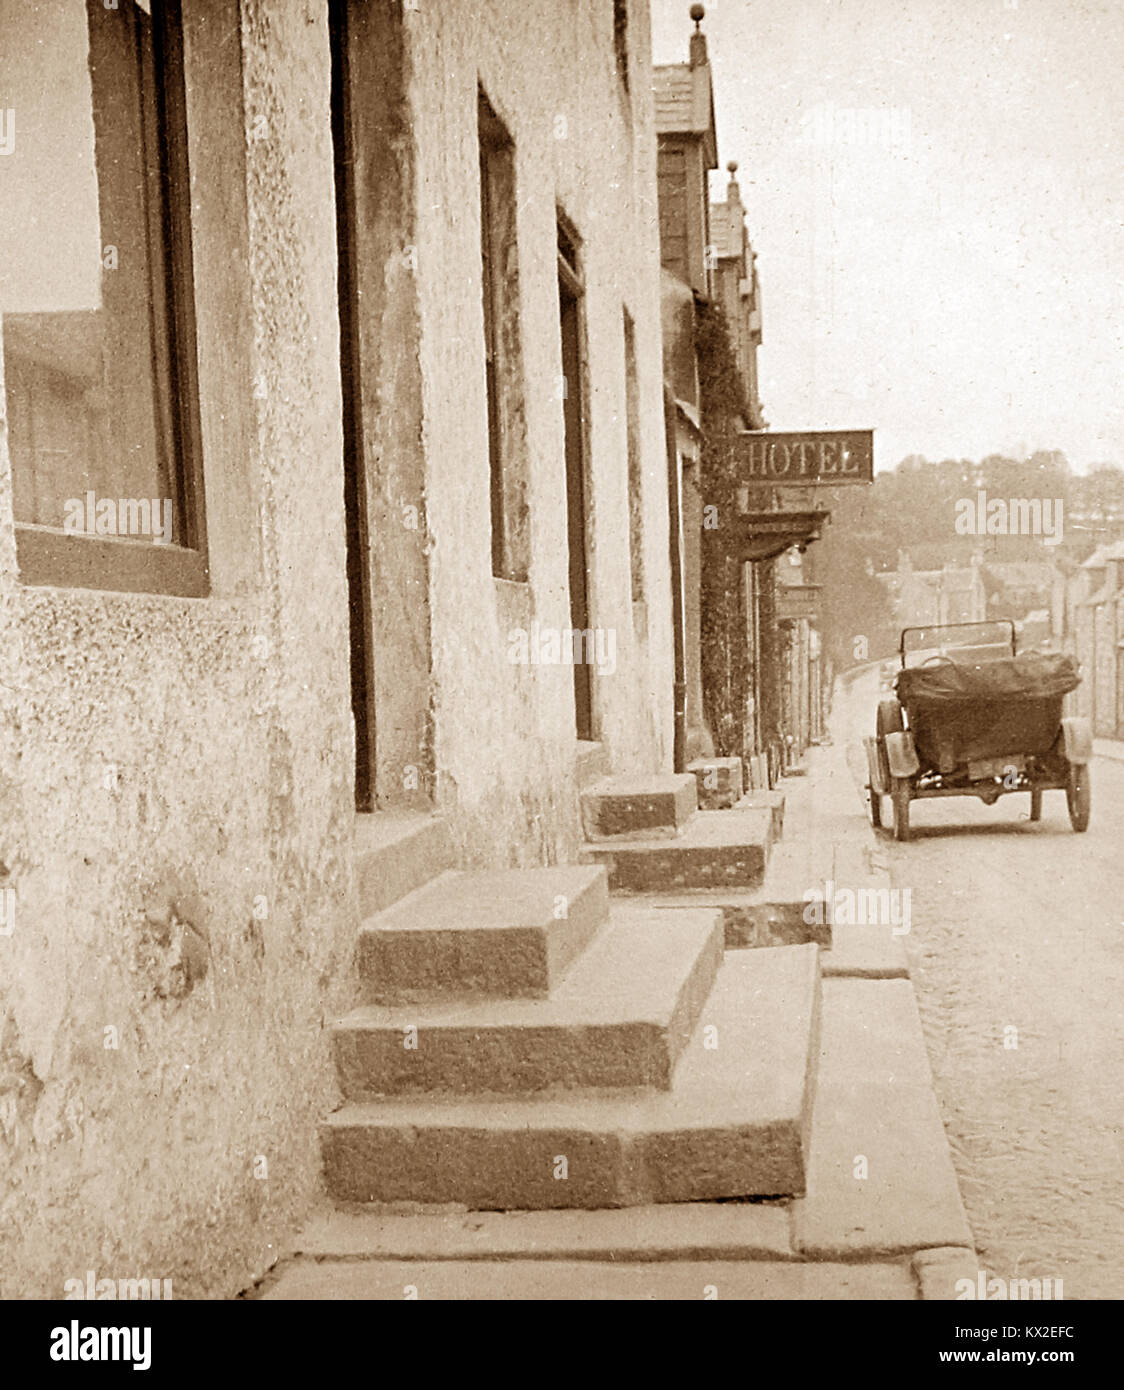 New Galloway, Scotland, early 1900s Stock Photo